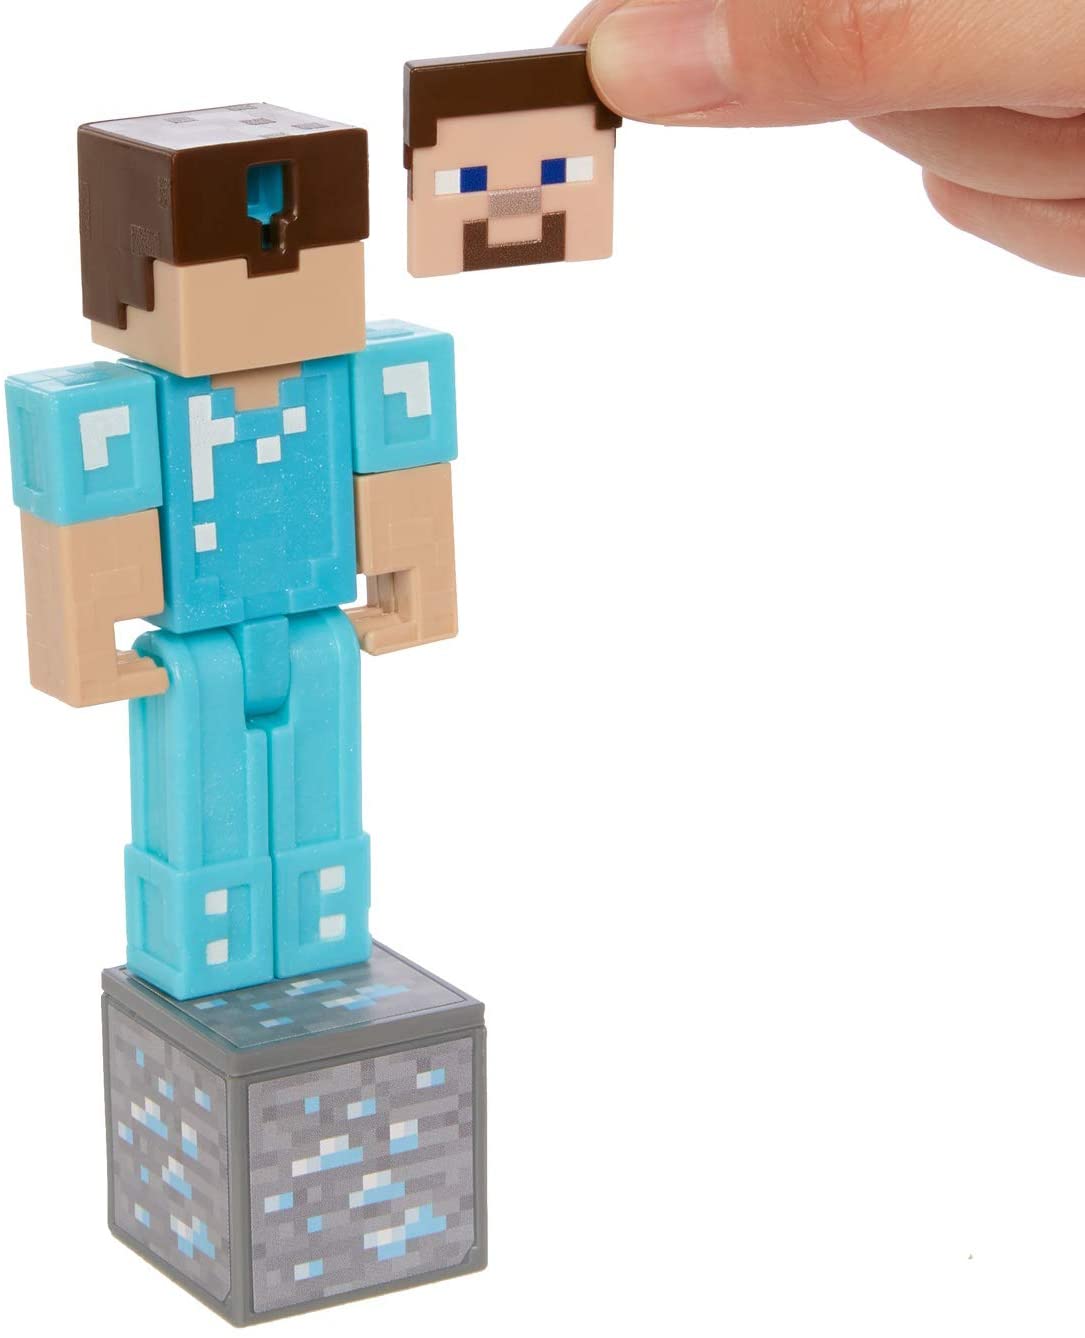 Minecraft - Boneco Steve Minerador Grande Dnh09 - MP Brinquedos